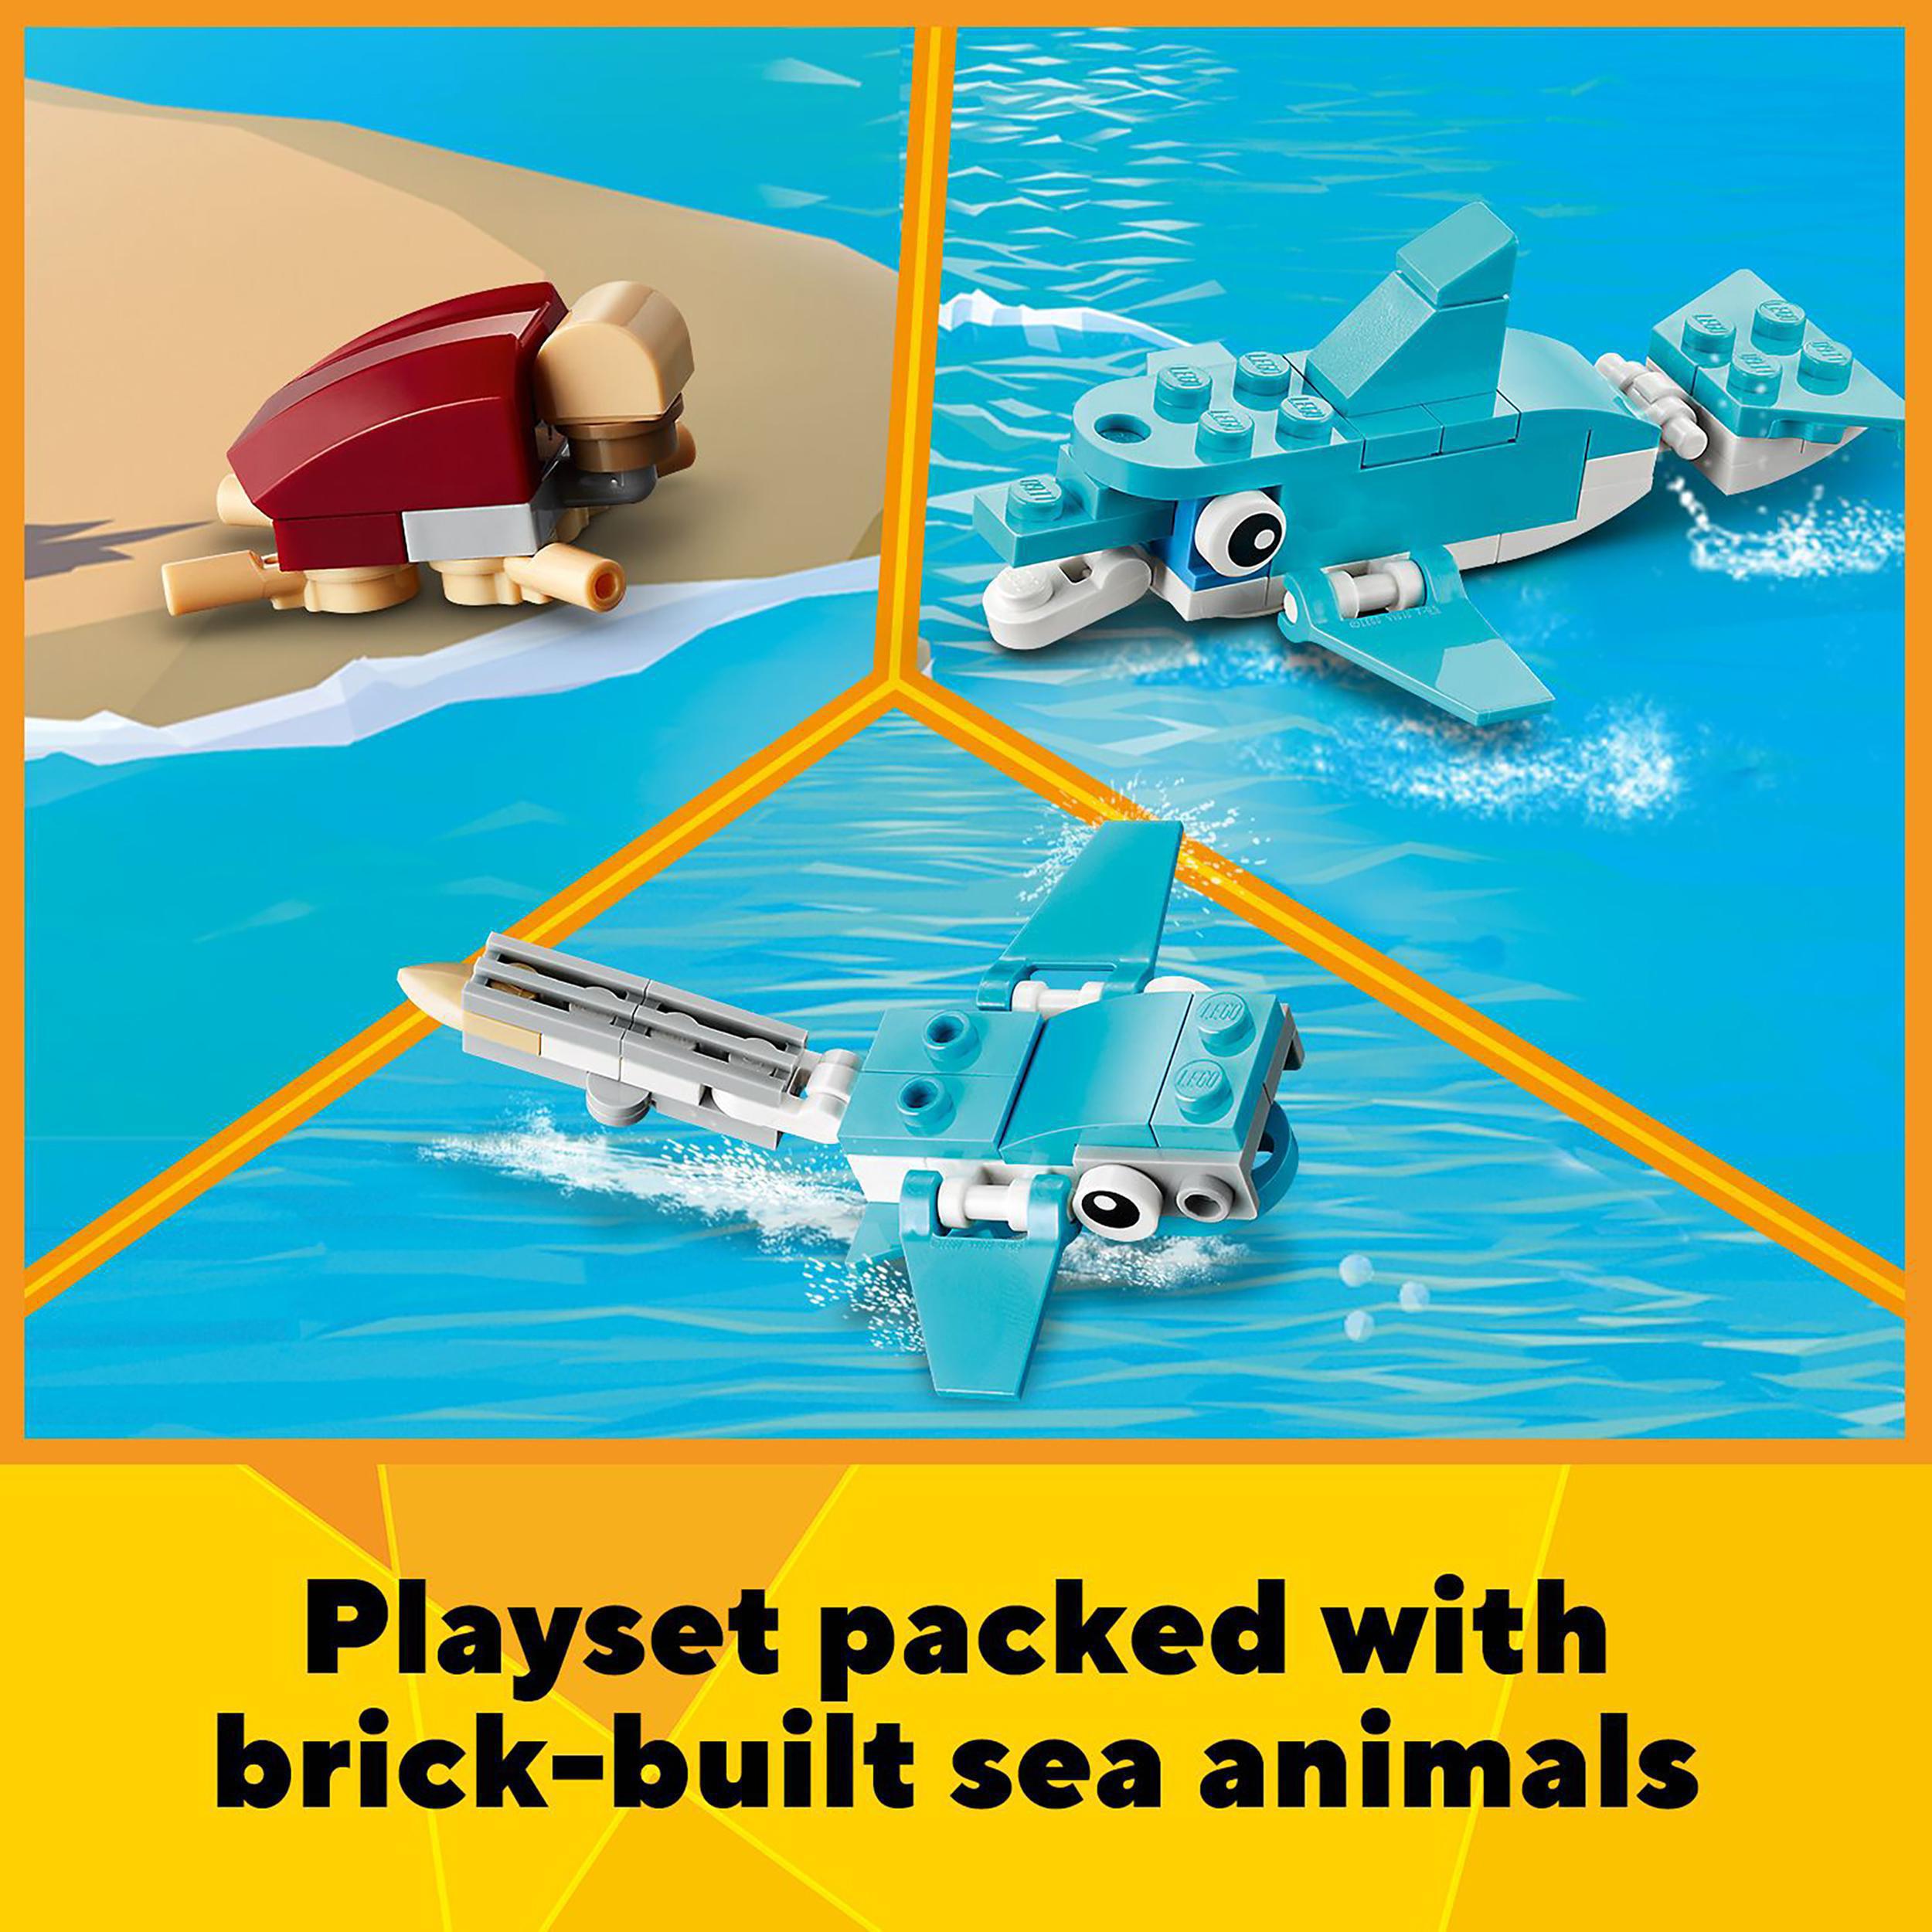 LEGO® Creator 3 in 1 Surfer Beach House Set 31118 Default Title